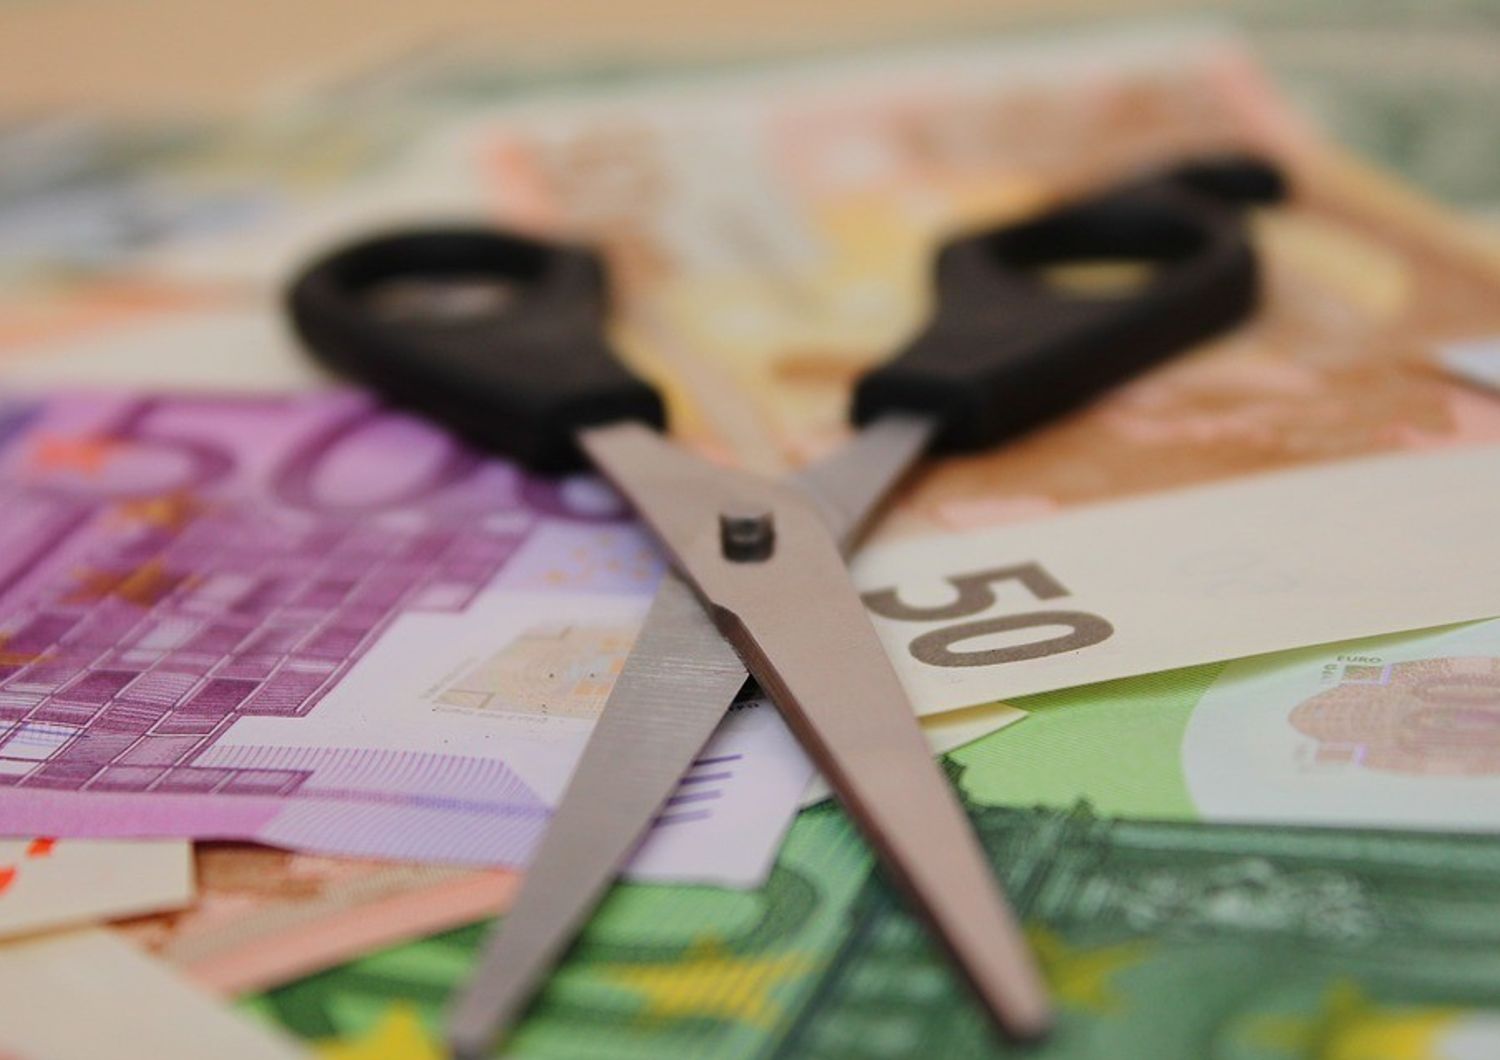 &nbsp;taglio spese euro riduzione debito &nbsp;- pixabay